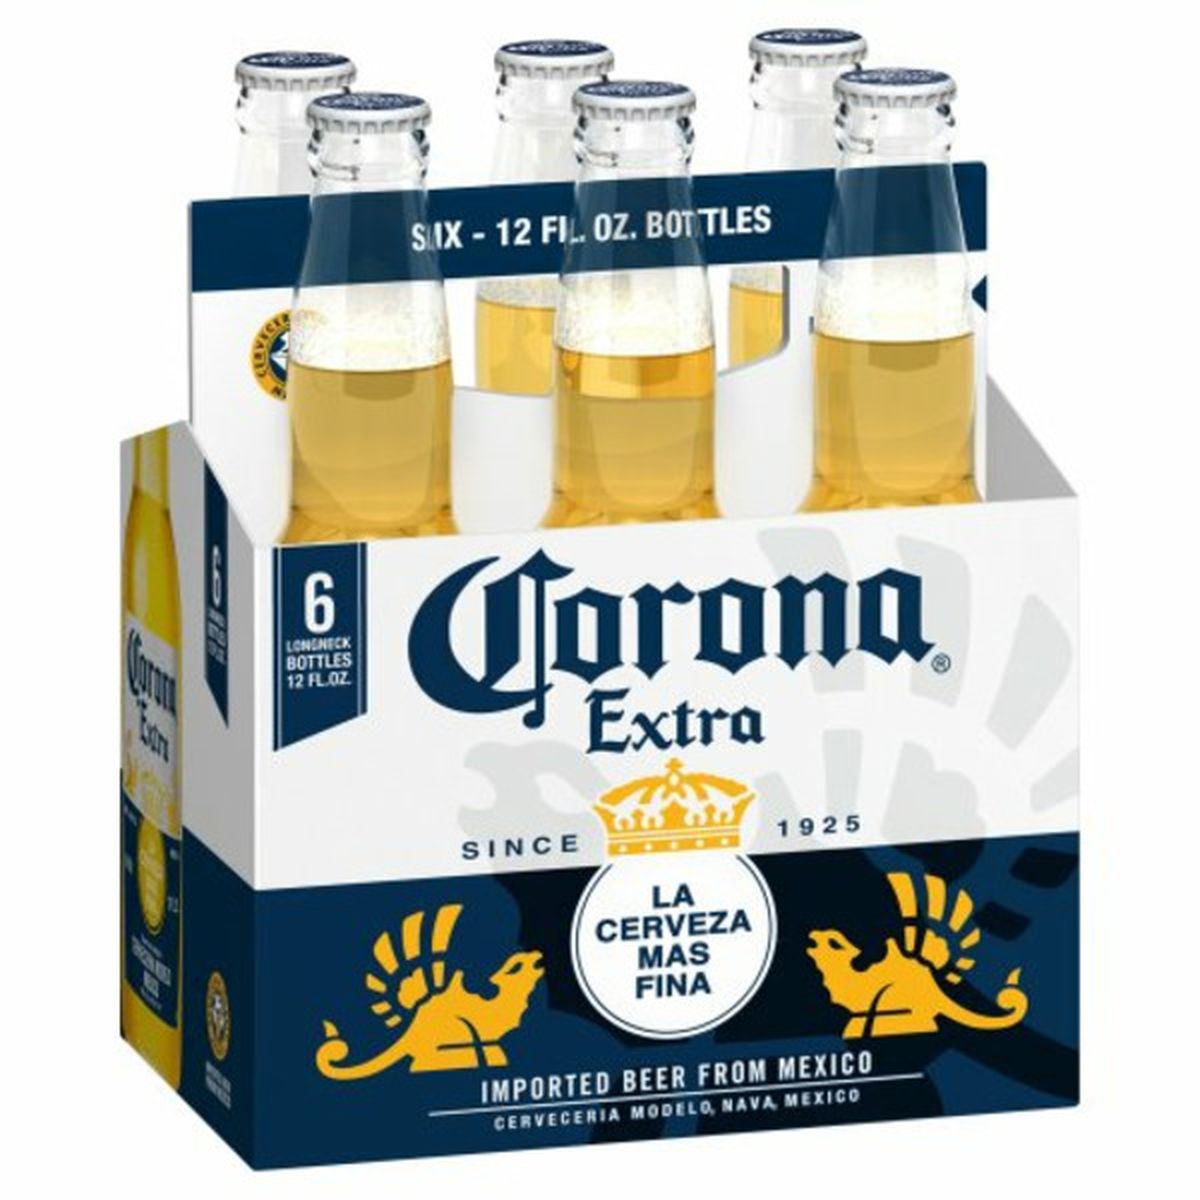 Calories in Corona Extra Extra Beer 6/12 oz bottles